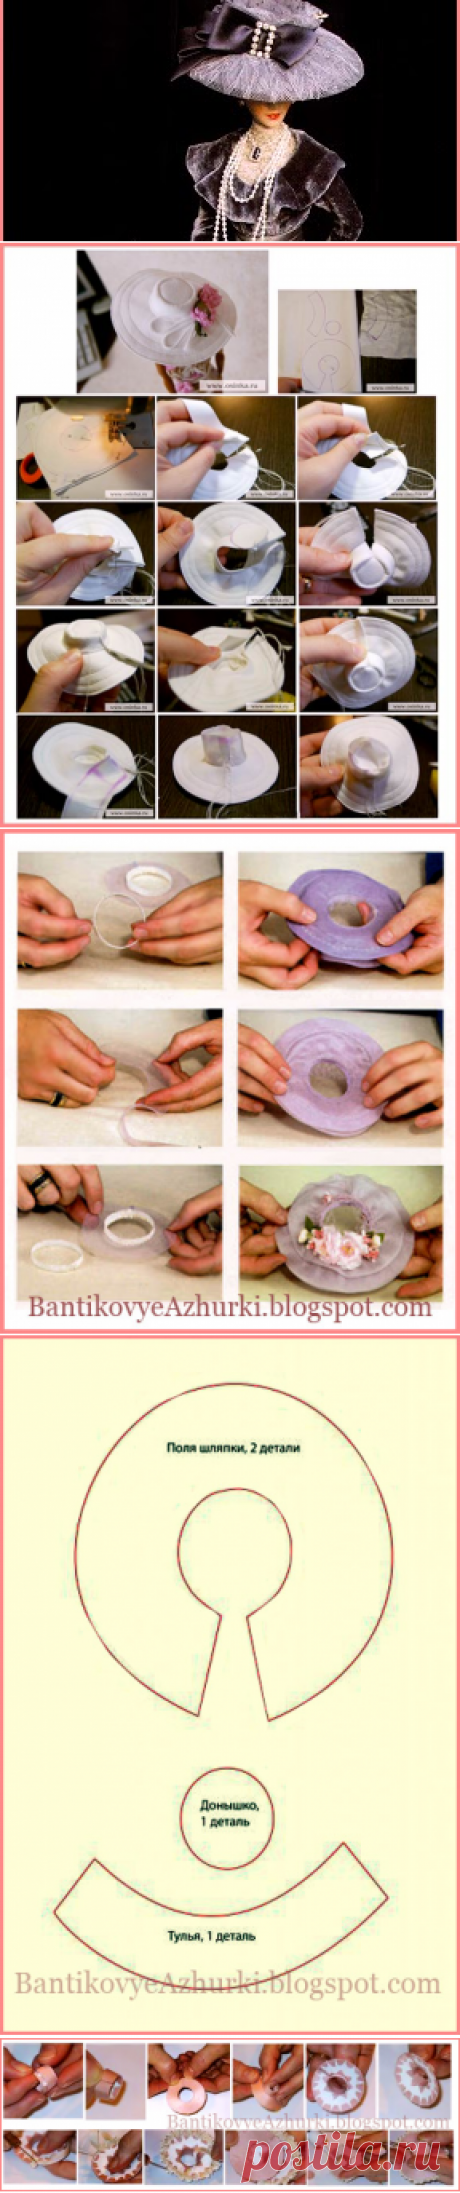 BantikovyeAzhurki.blogspot.com: Шляпы и шляпки для кукол своими руками.